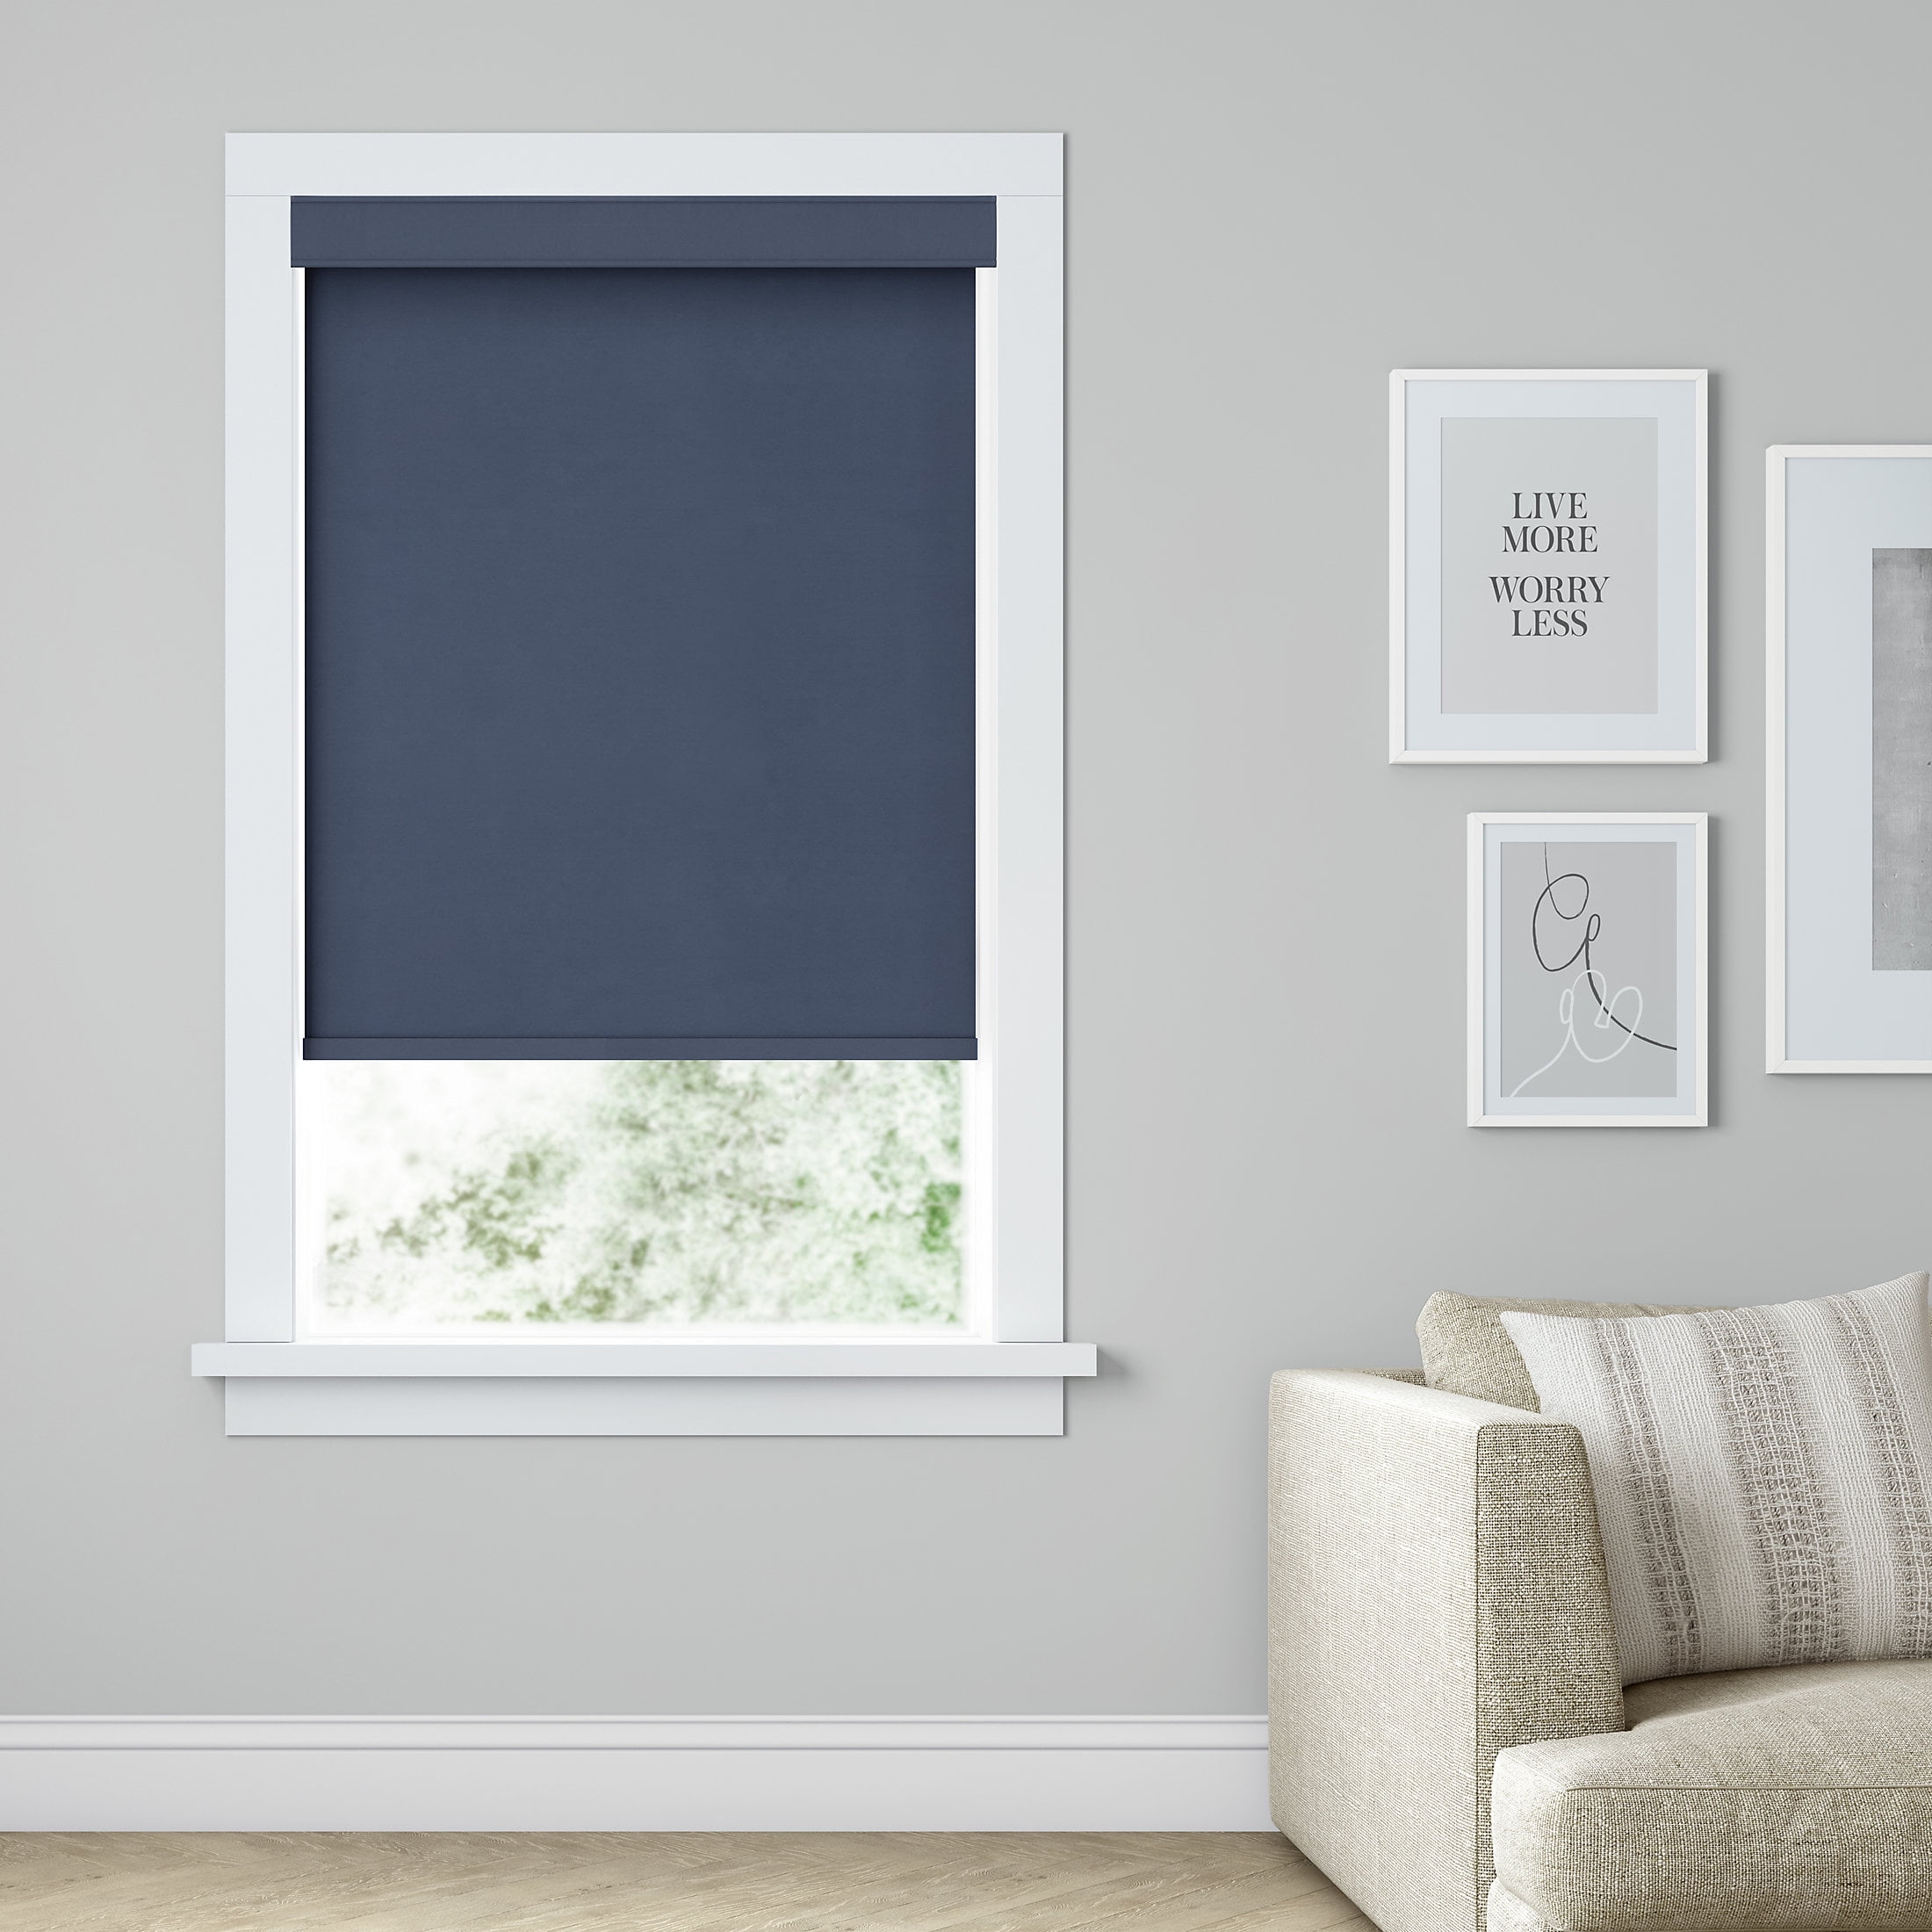 LEVOLOR Window Roller Shade 19” x 72” White W/ Brackets & Hem Grip 